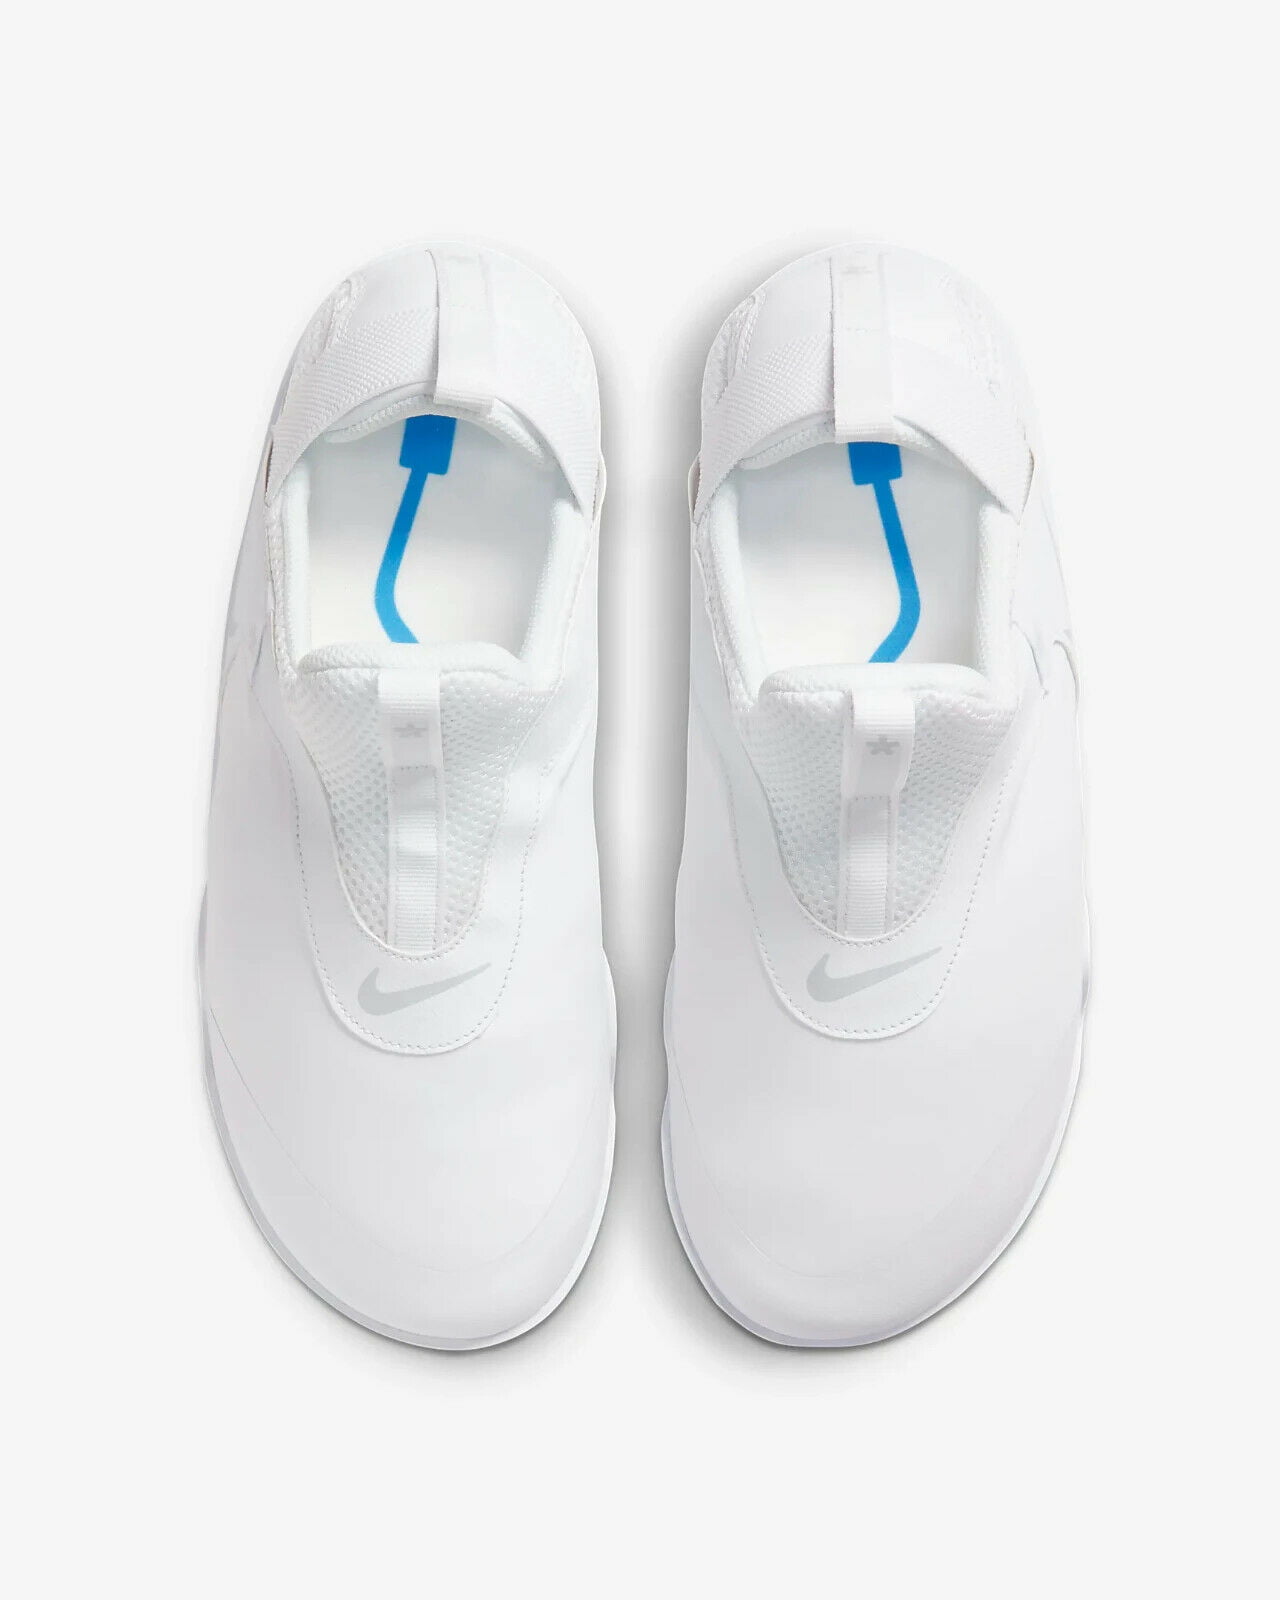 Nike Zoom Pulse White/Pure Platinum Men's Medical Size 13 -